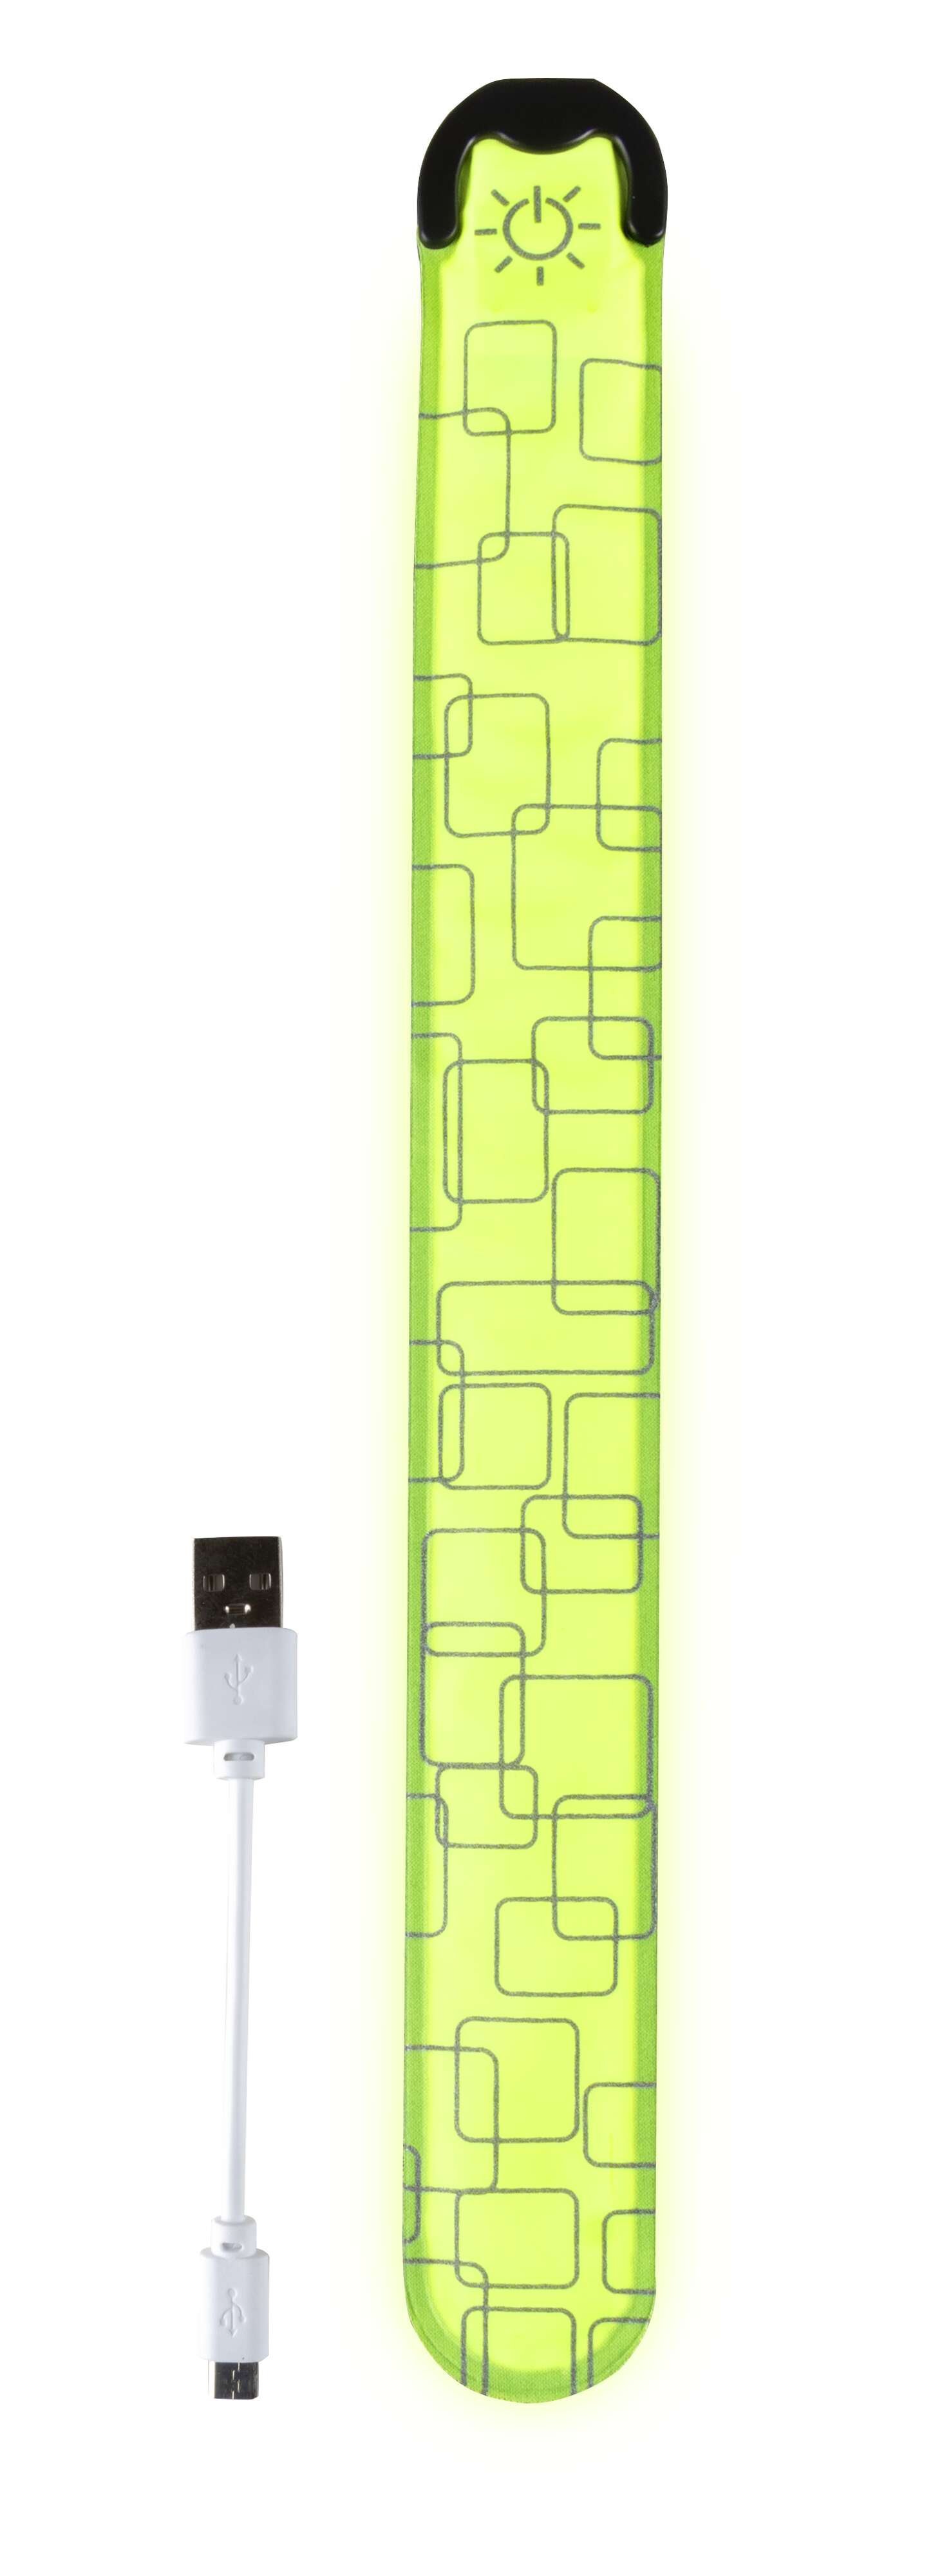 Slap Wrap LED lumineux avec recharge USB 36x3,5 cm jaune